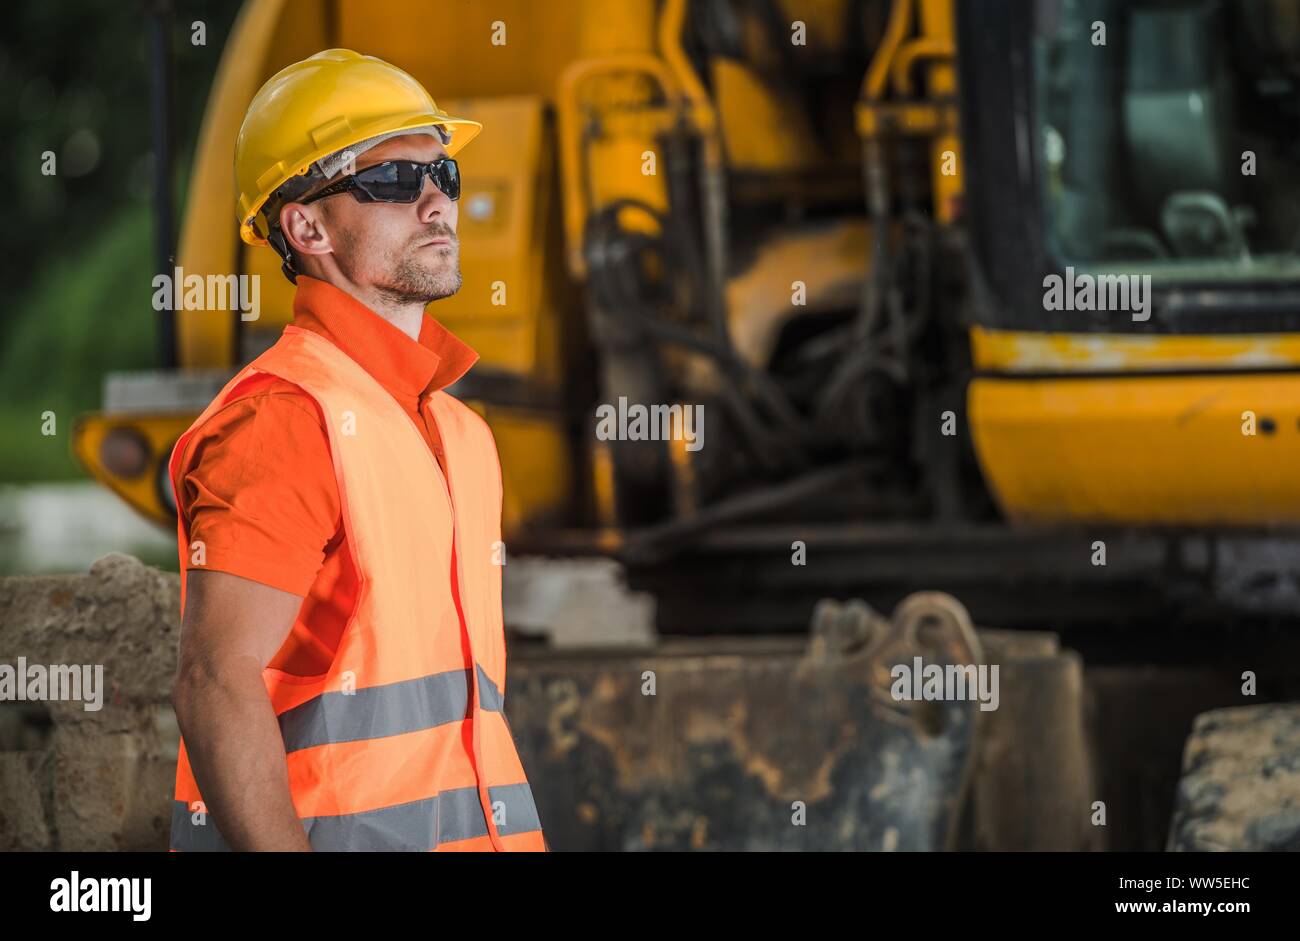 Construction Worker on Duty. Caucasian Men in His 30s Wearing